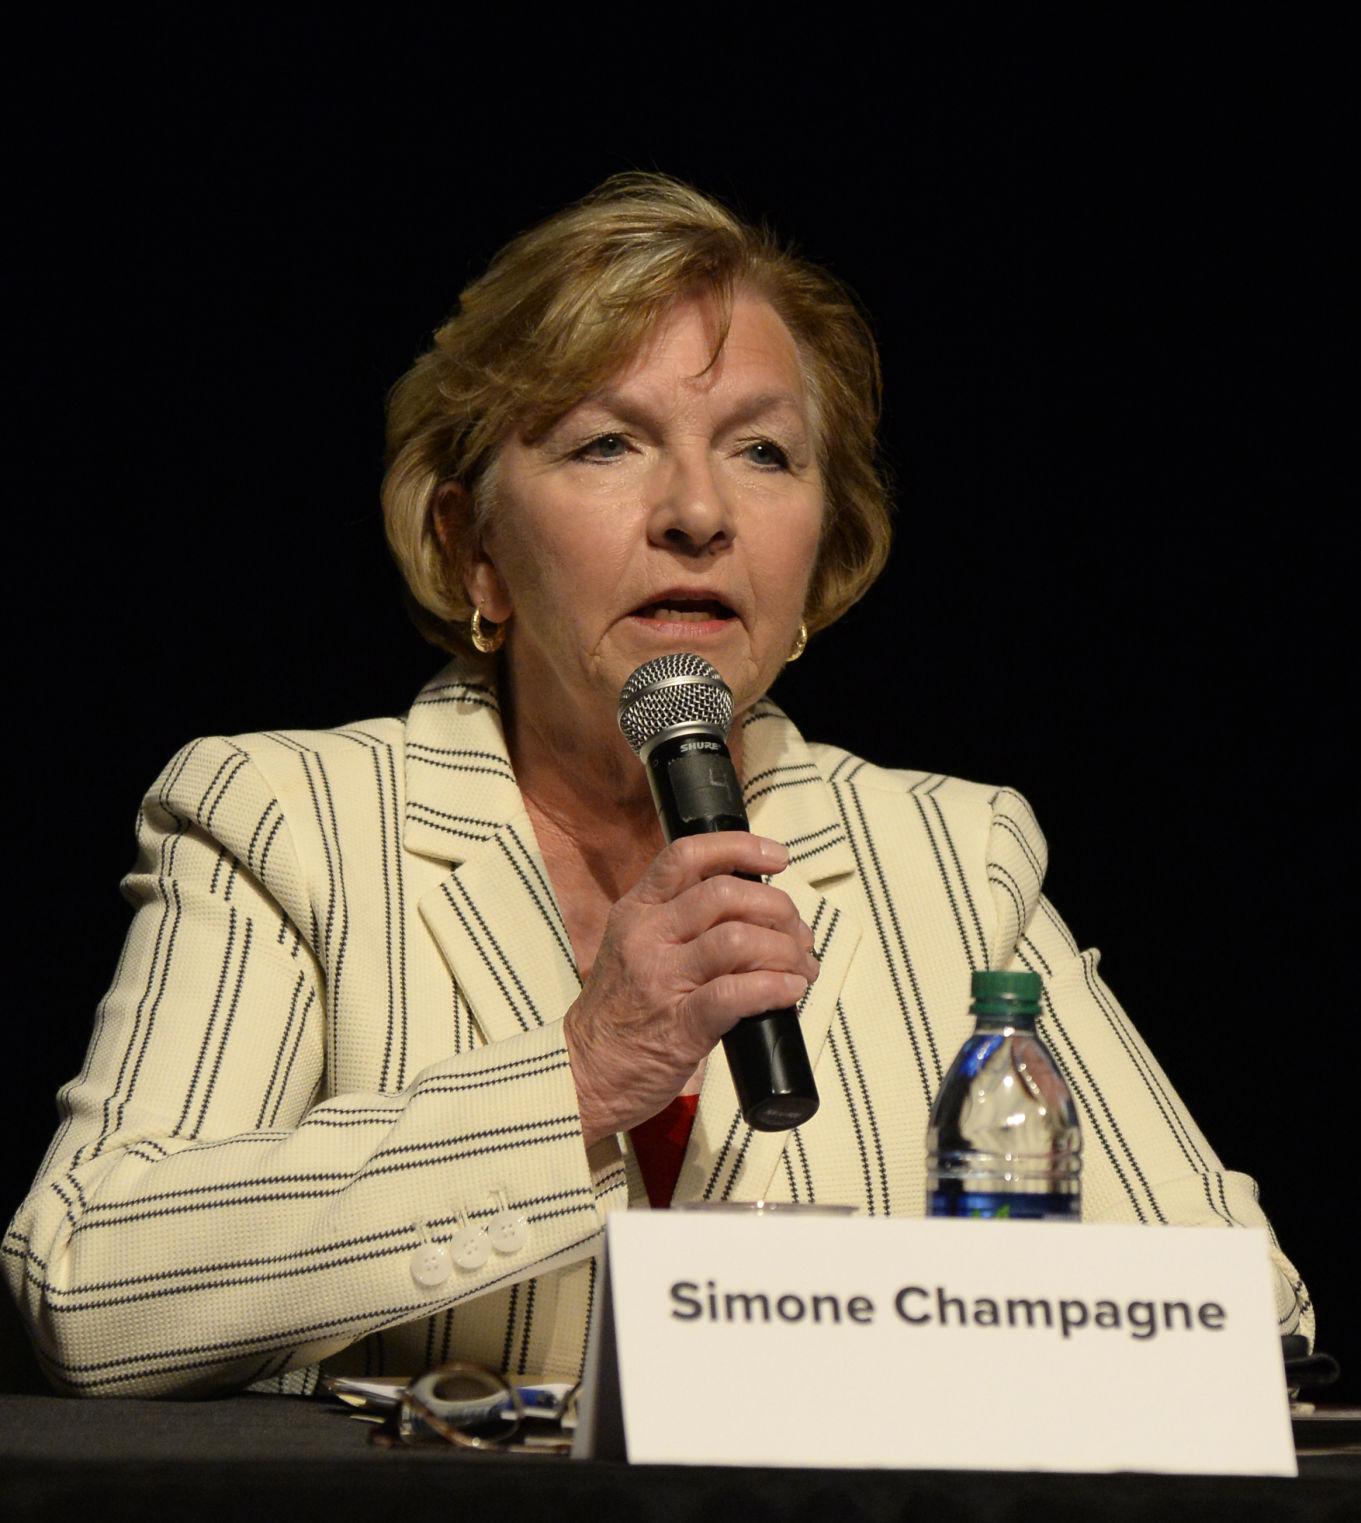 Newly elected Lafayette mayorpresident appoints Simone